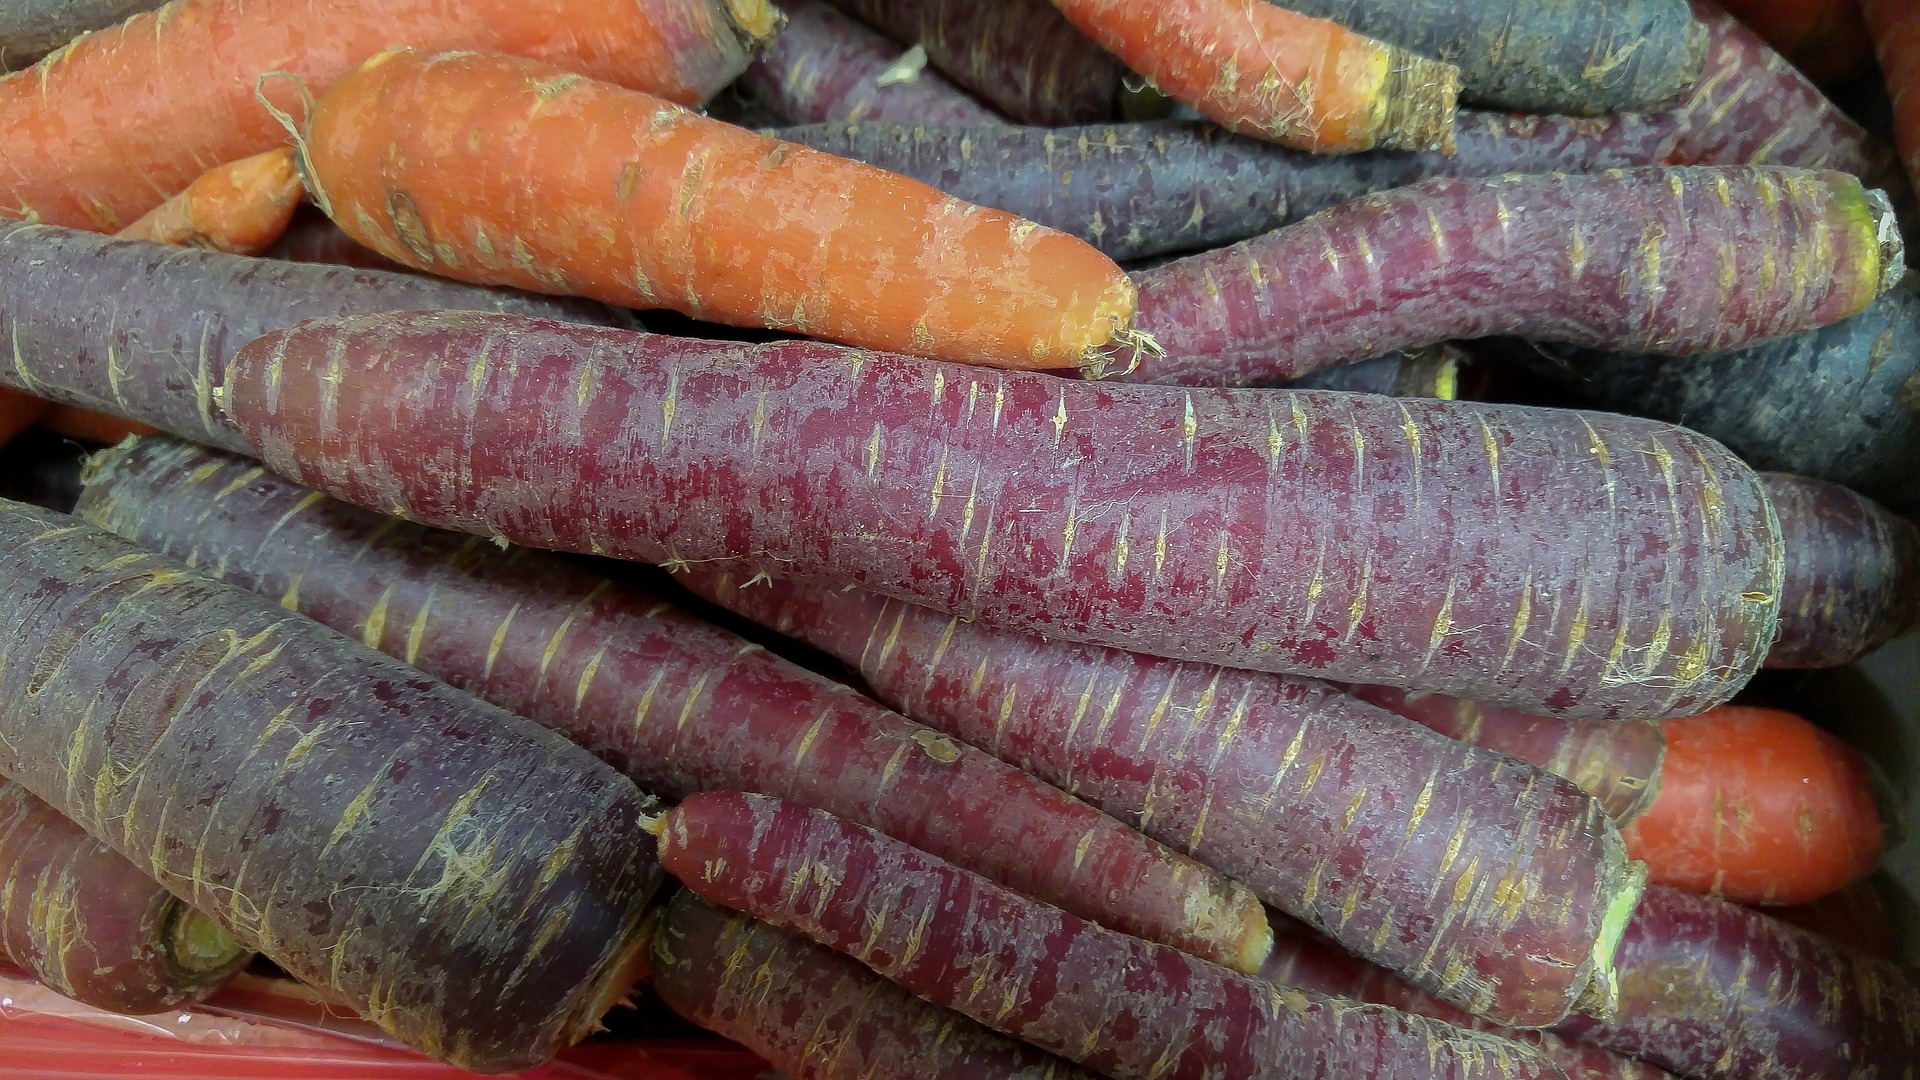 diferent colored carrots